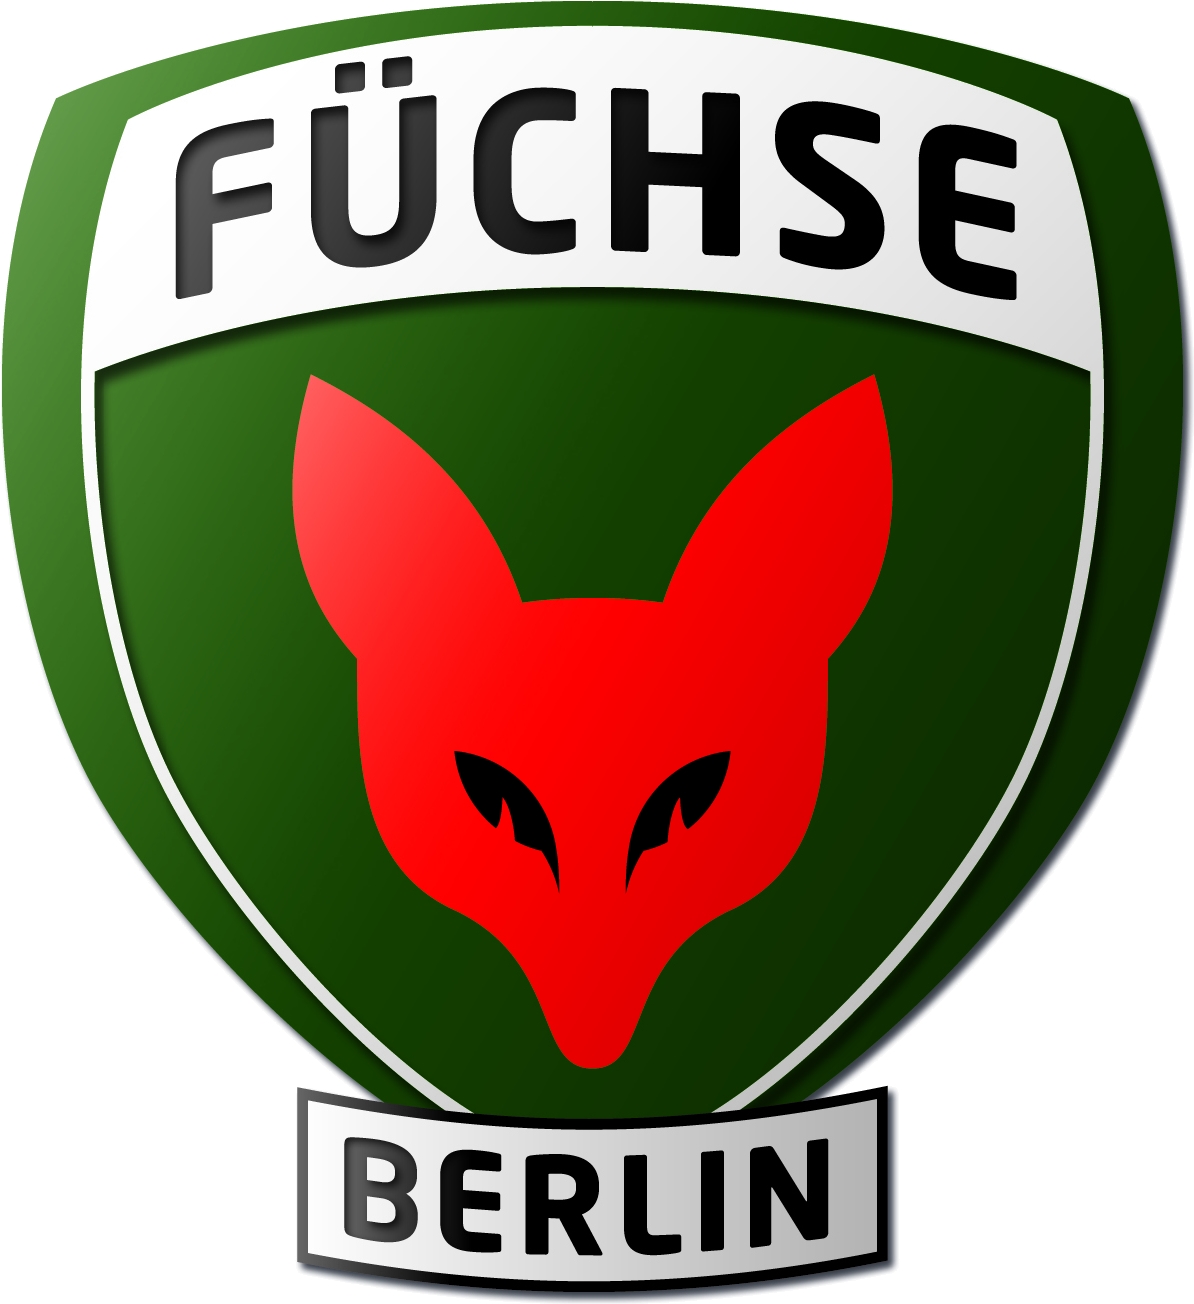 /artikel/14-15/Fchse Berlin Logo.jpg